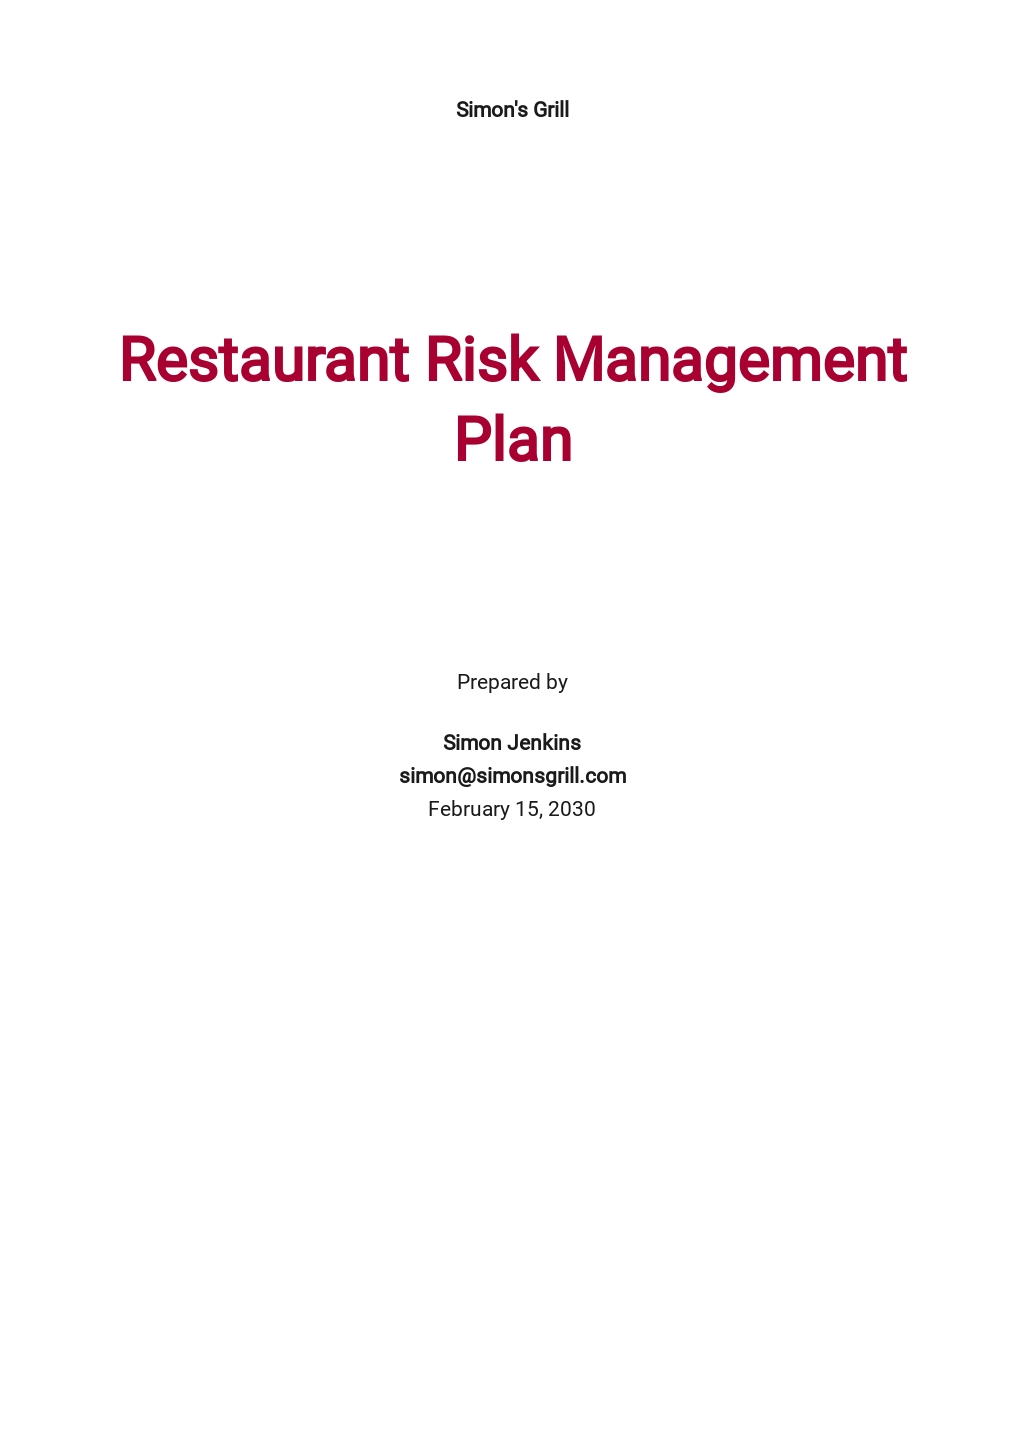 Restaurant Risk Management Plan Template.jpe